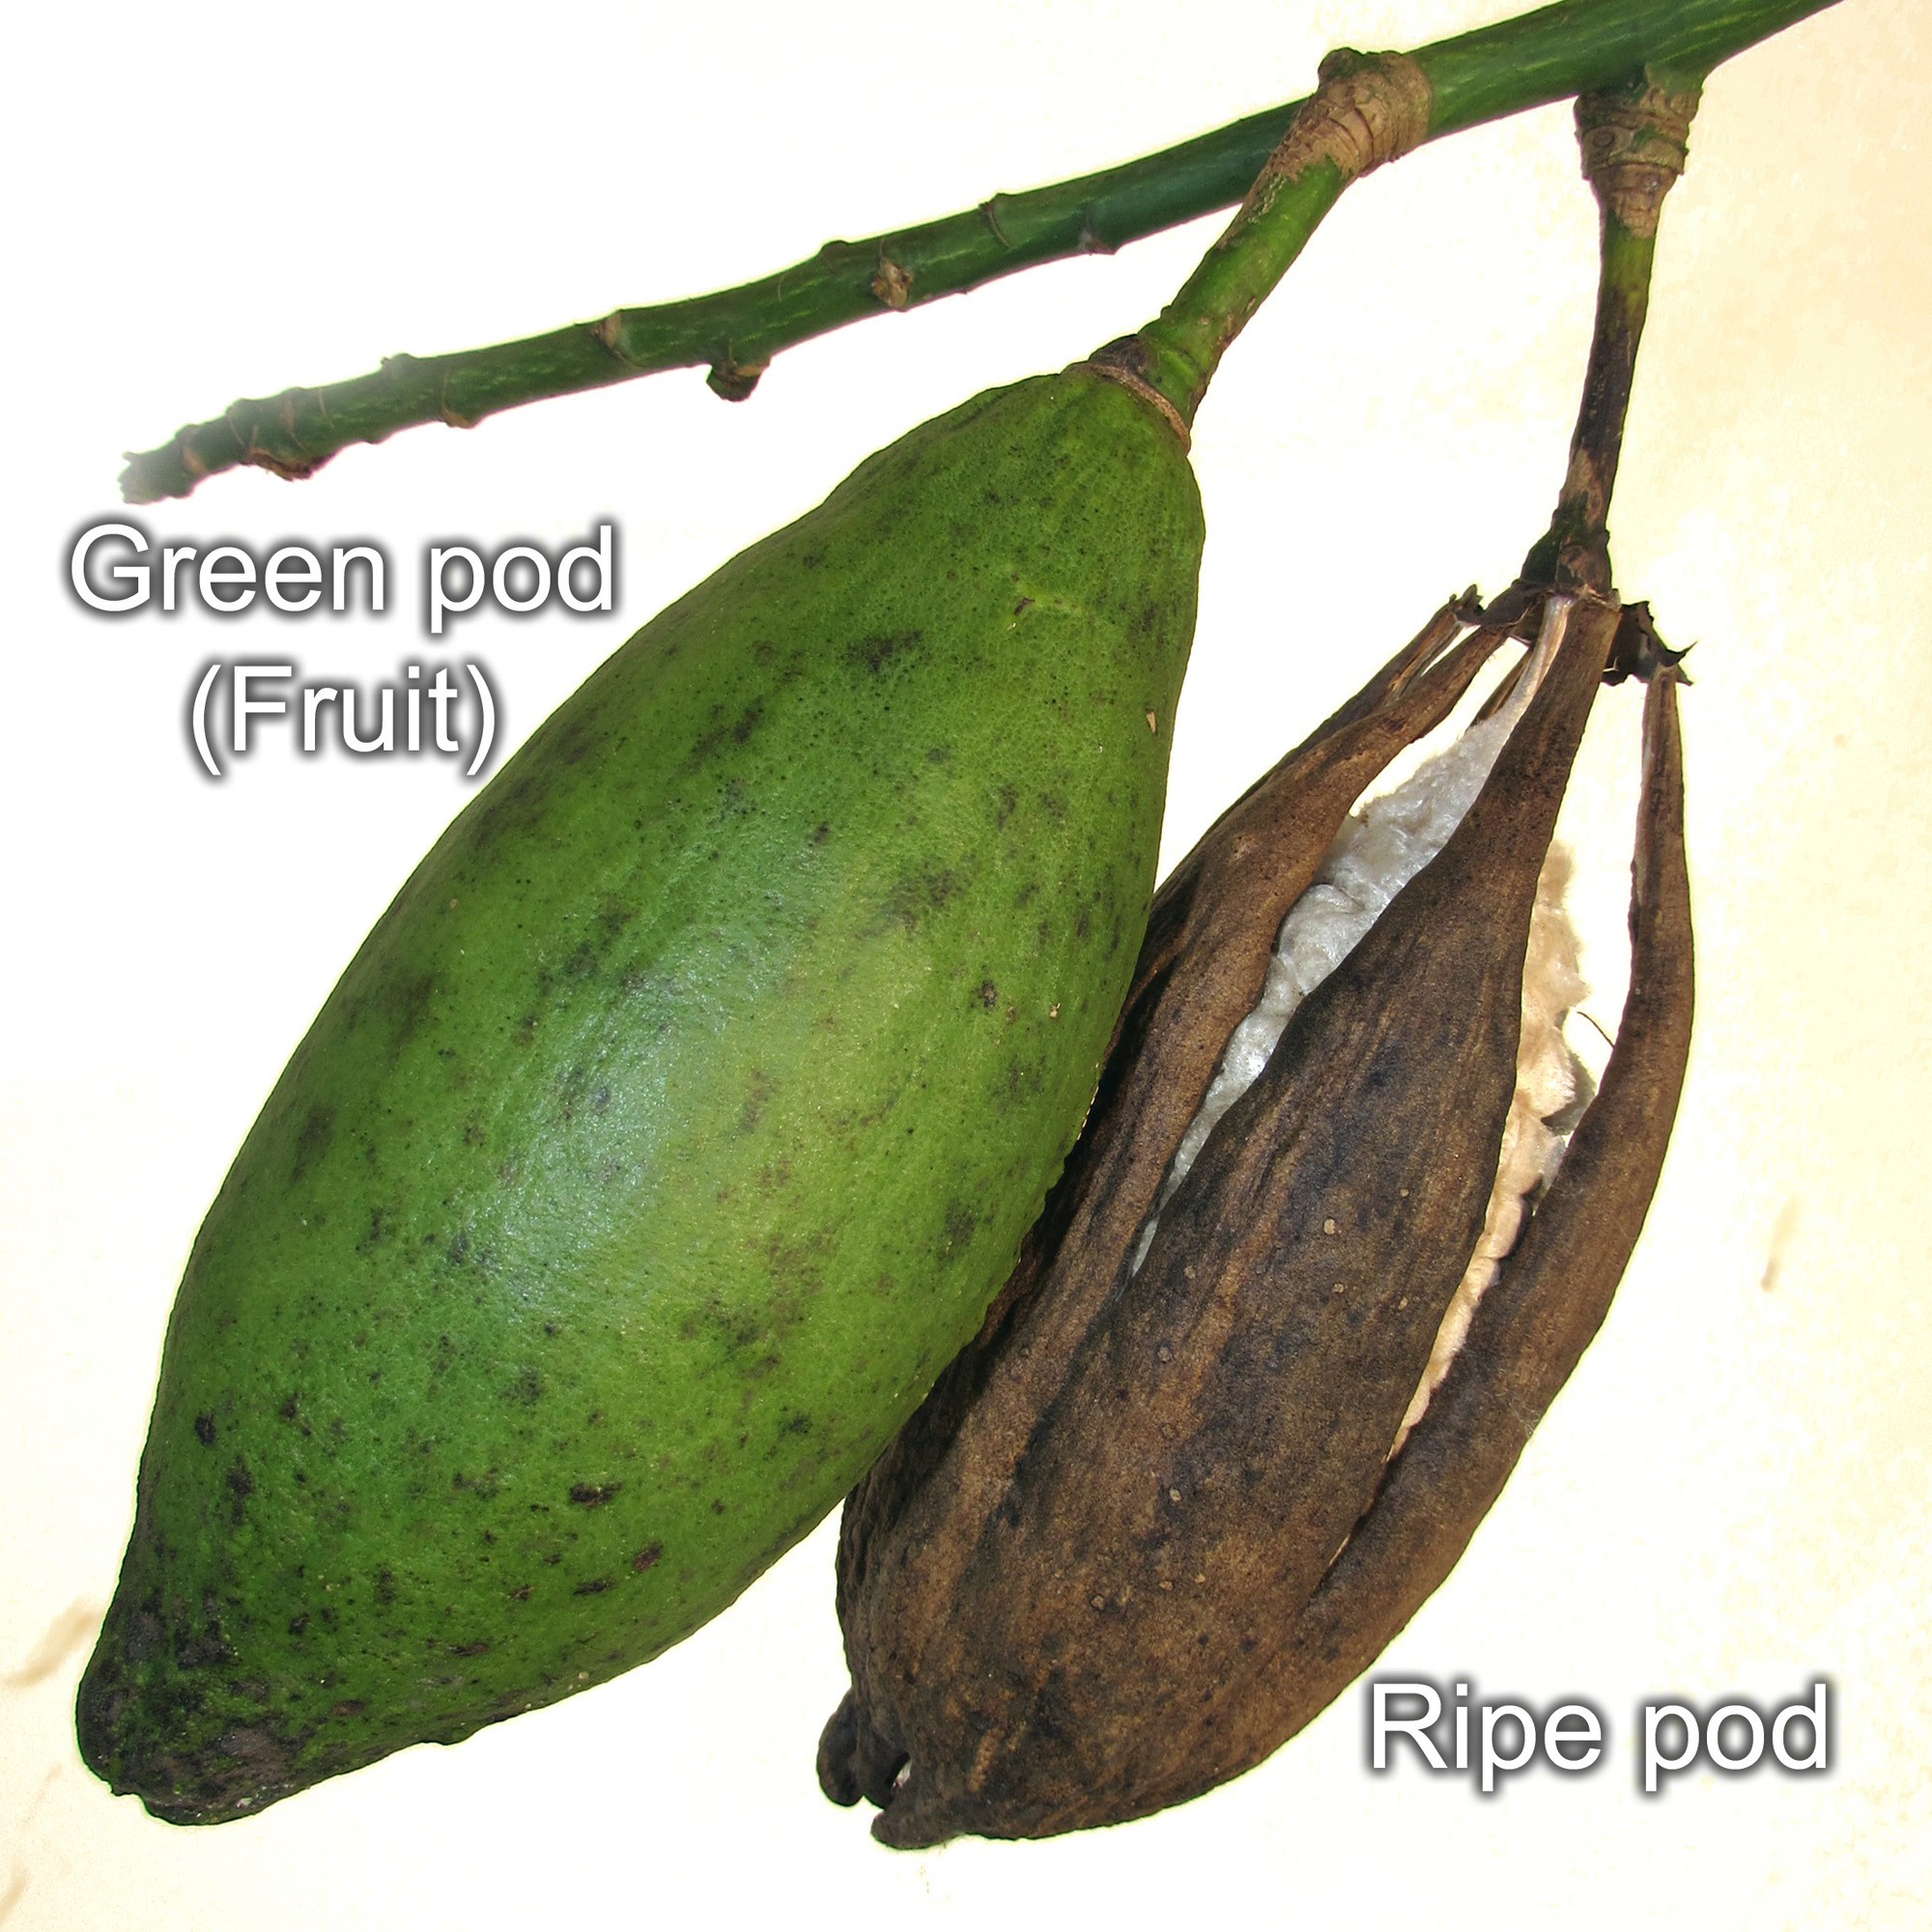 Green pod (Fruit) and  Ripe pod